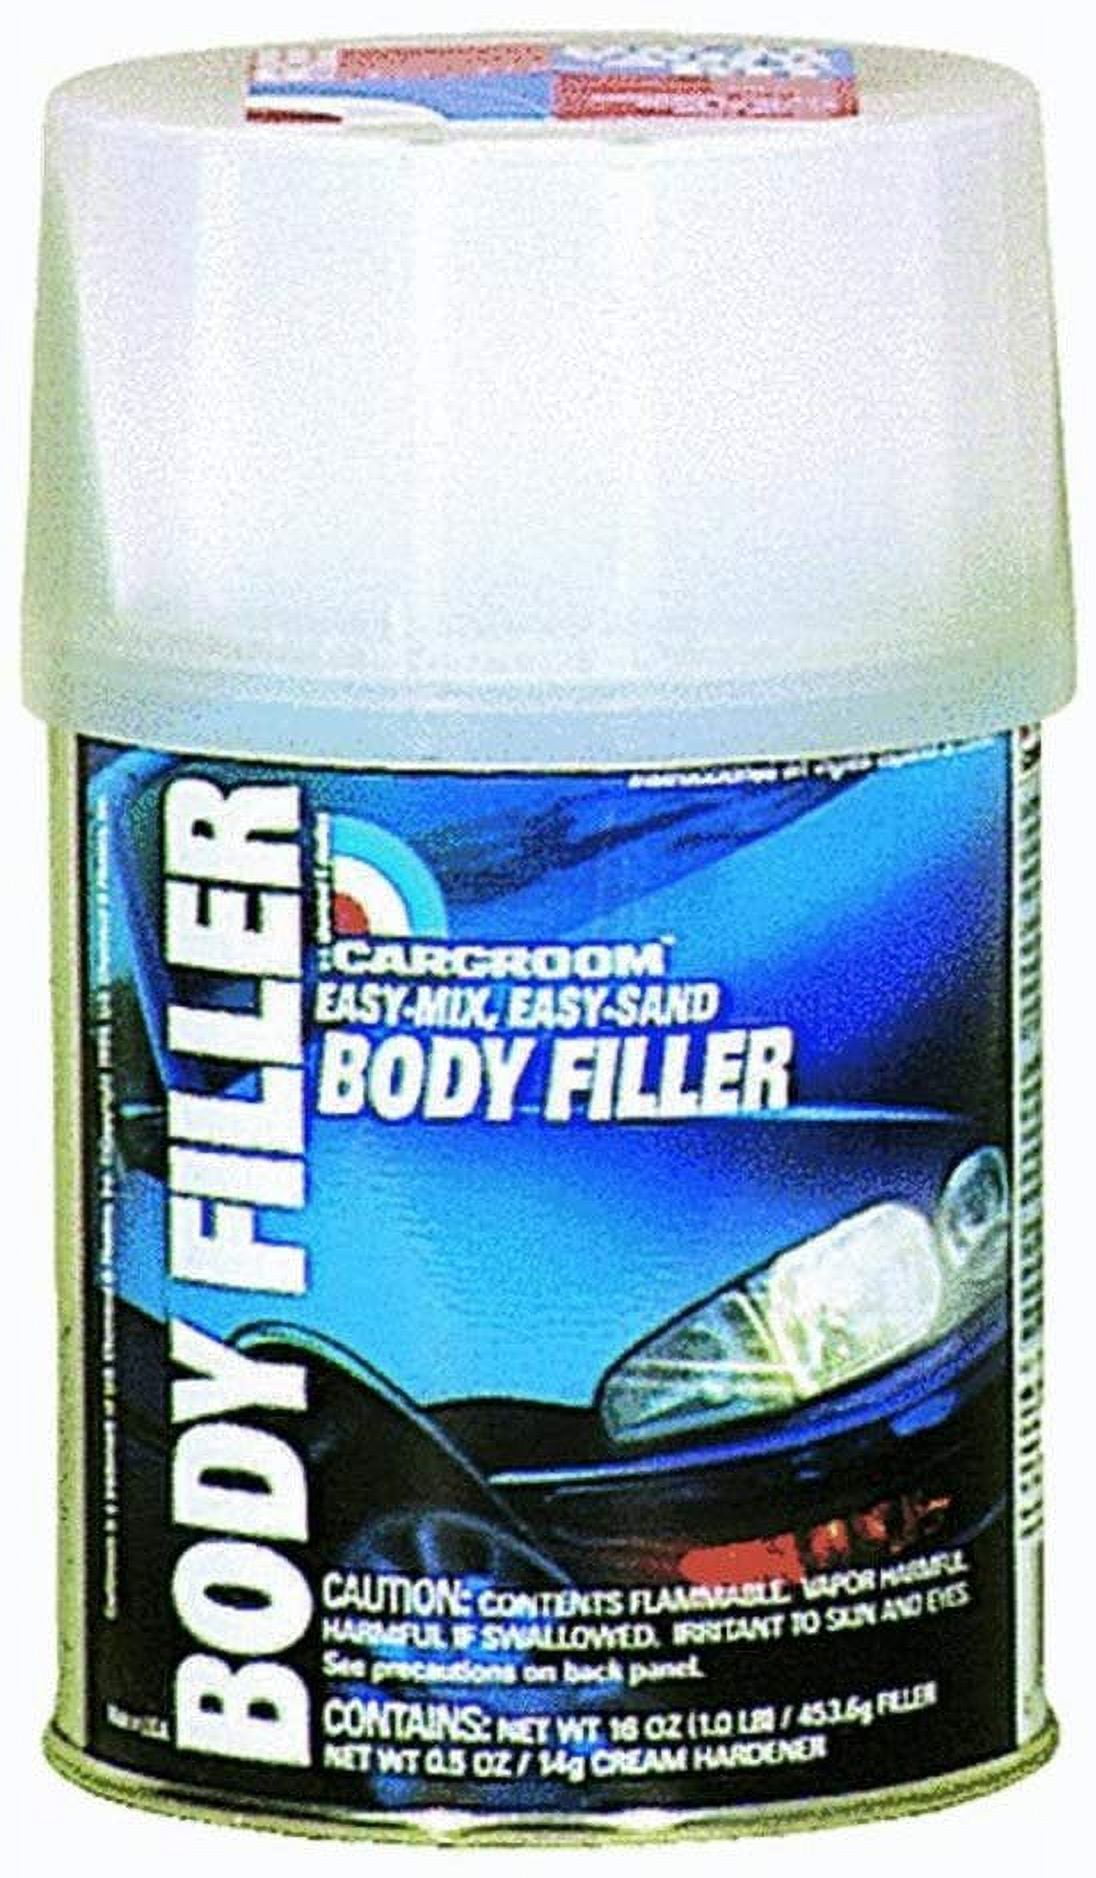 Buy Cargroom Body Filler 7.75 Lb.